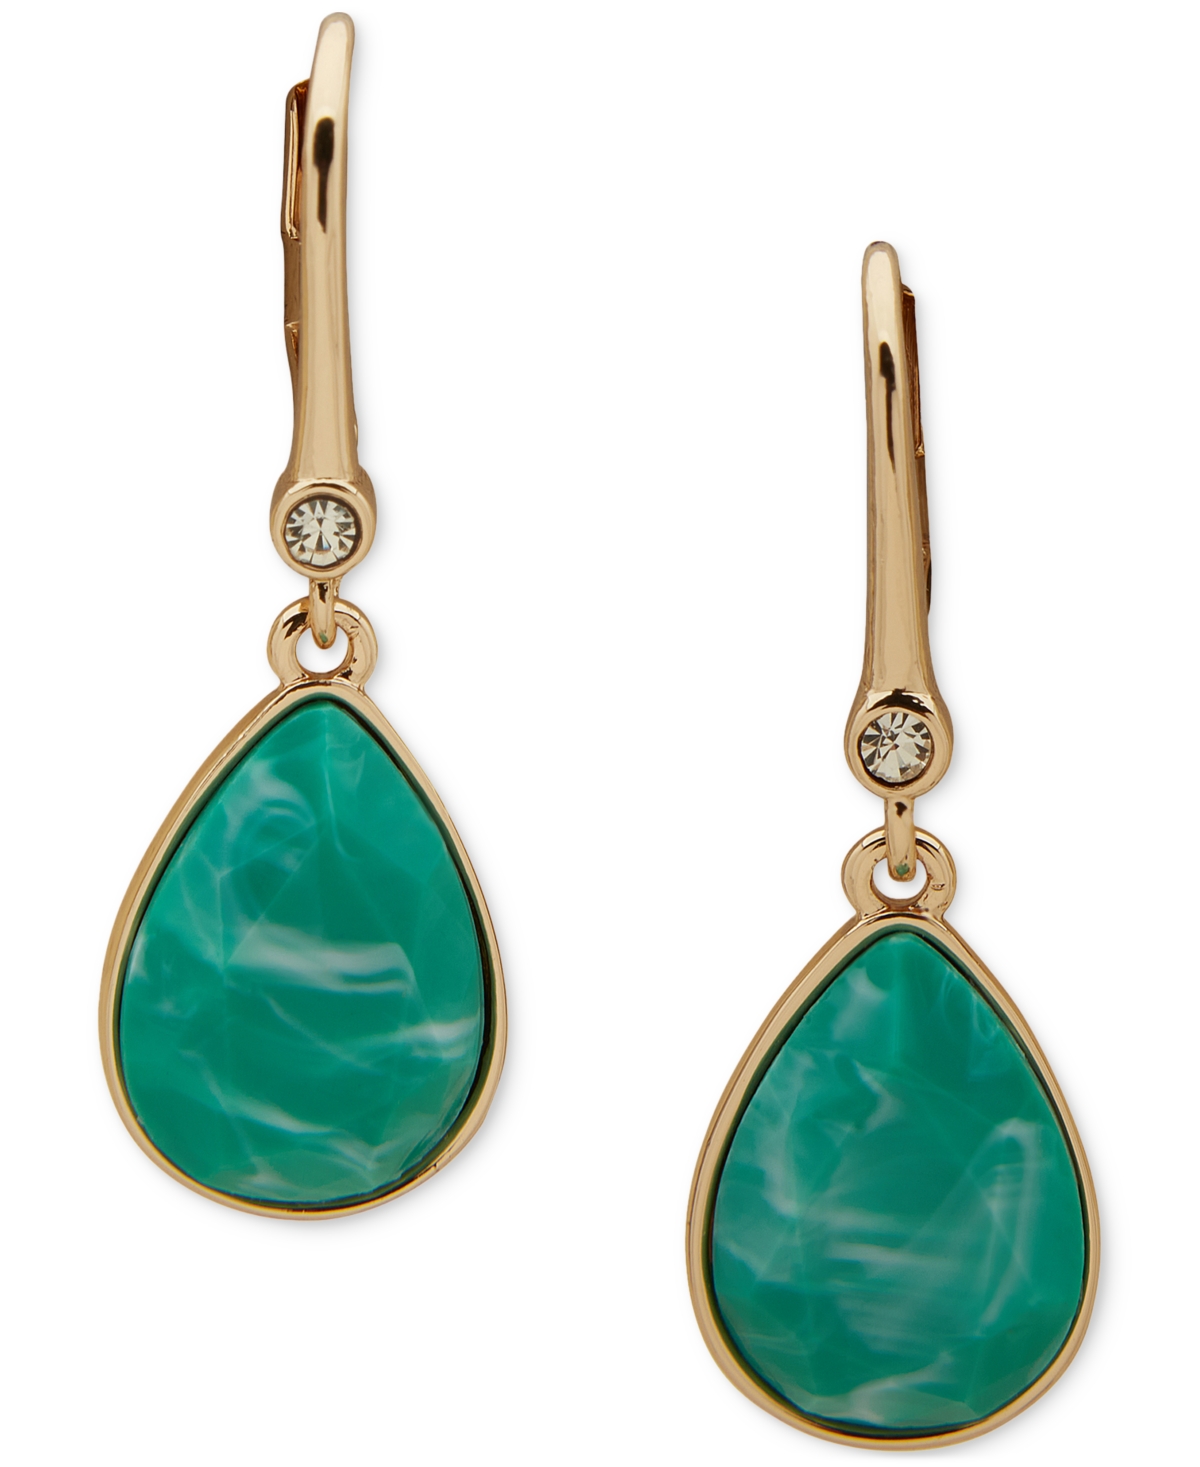 Gold-Tone Pave & Tear-Shape Stone Drop Earrings - Turquoise